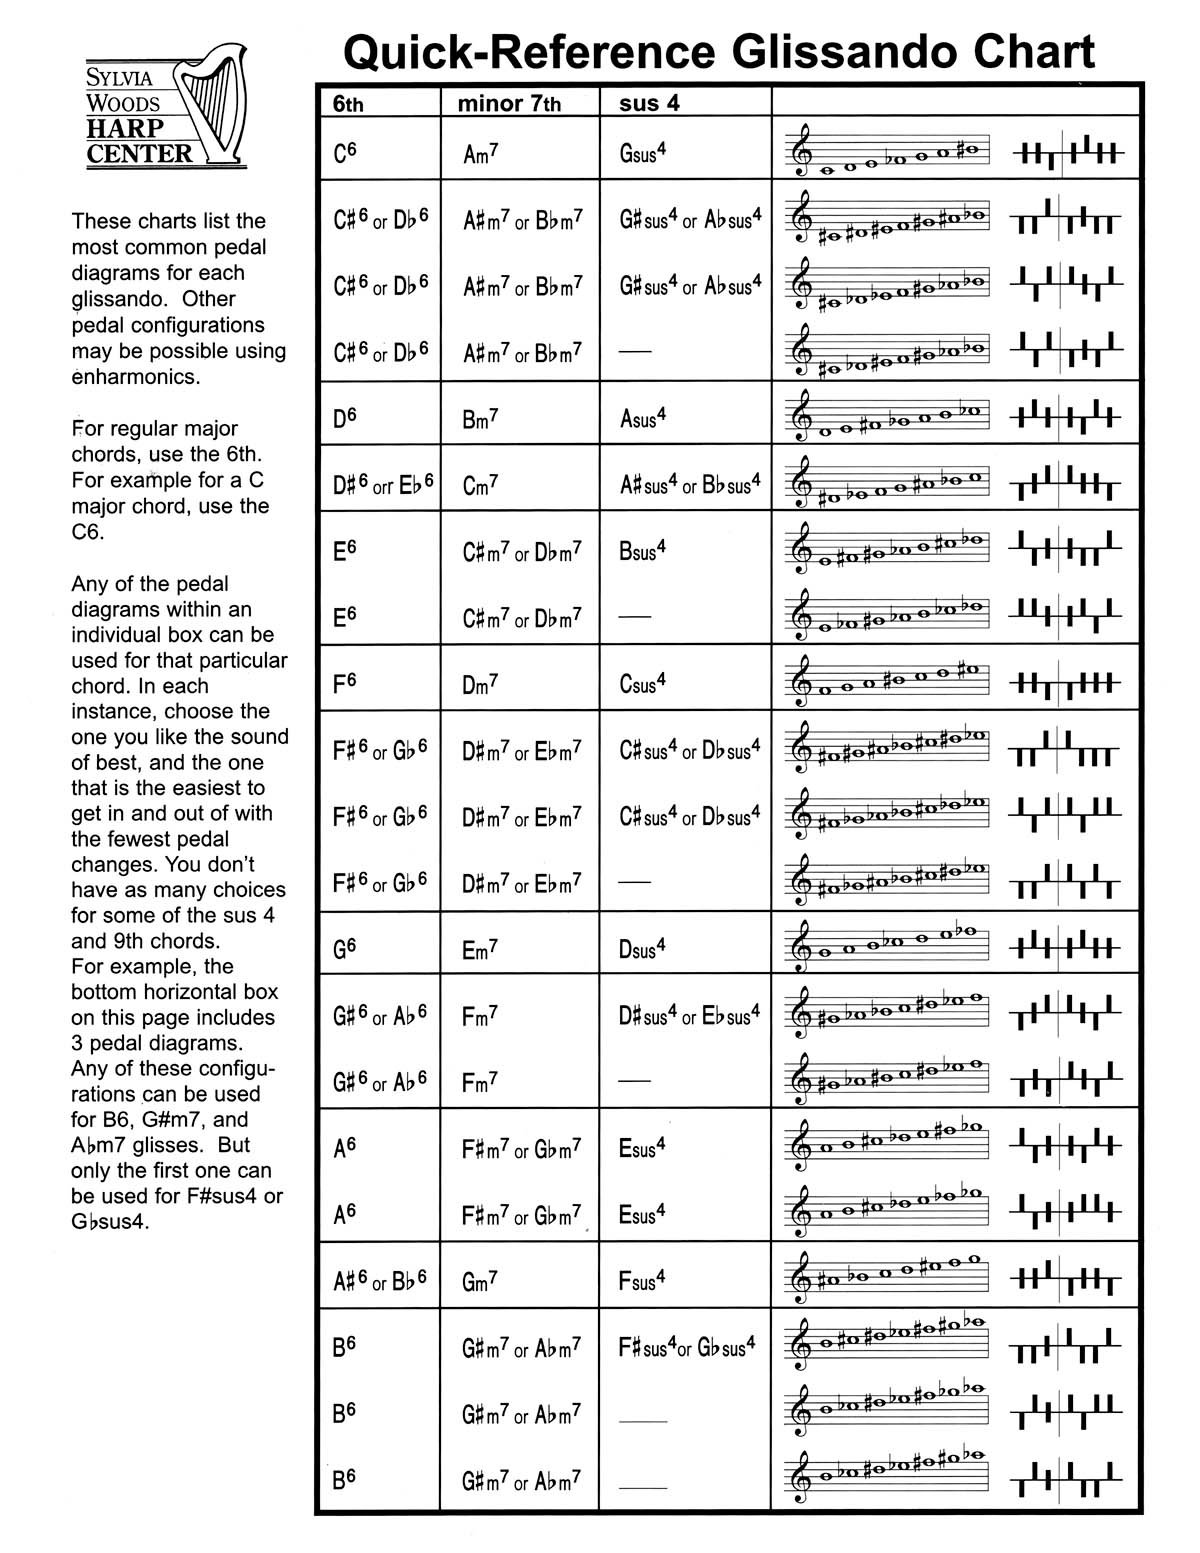 Quick-Refuerence Glissando Chart(fuer Harp)